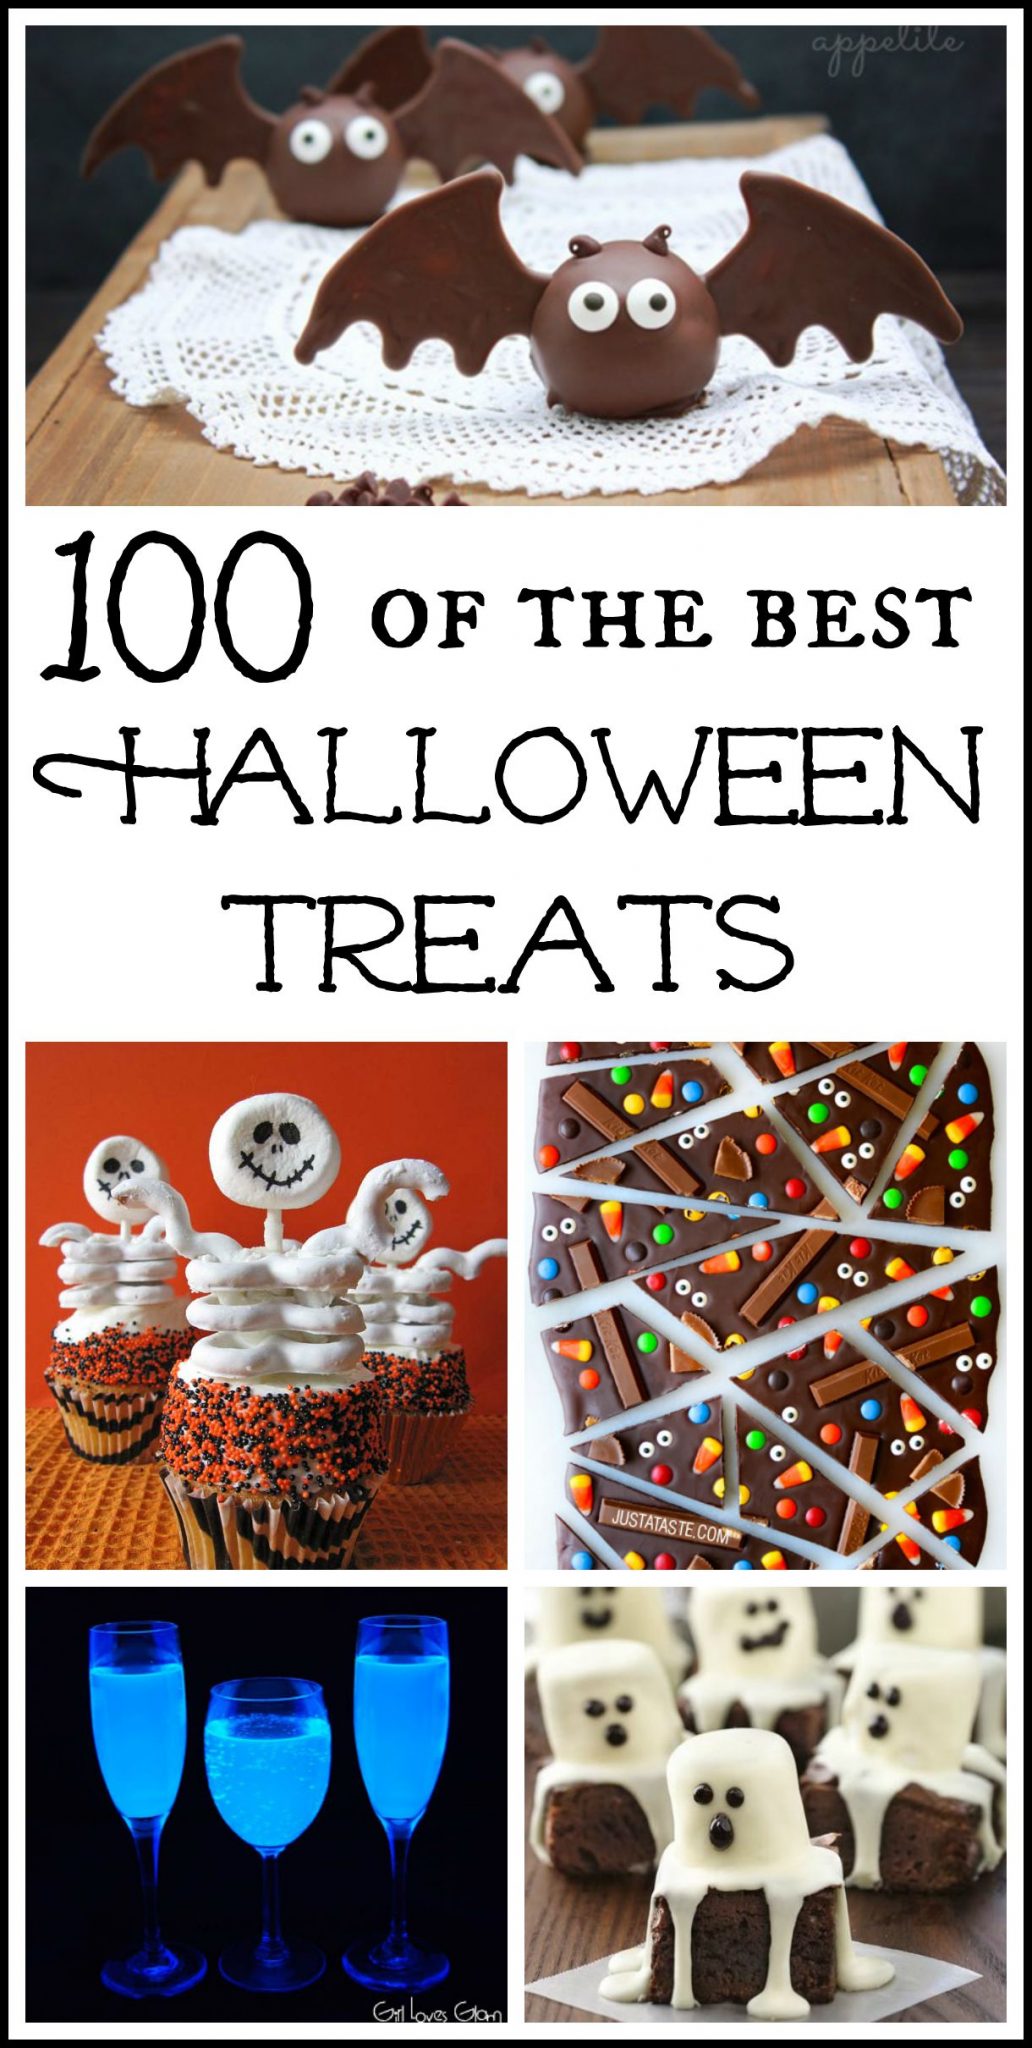 Over 100 of the best Halloween treat ideas!